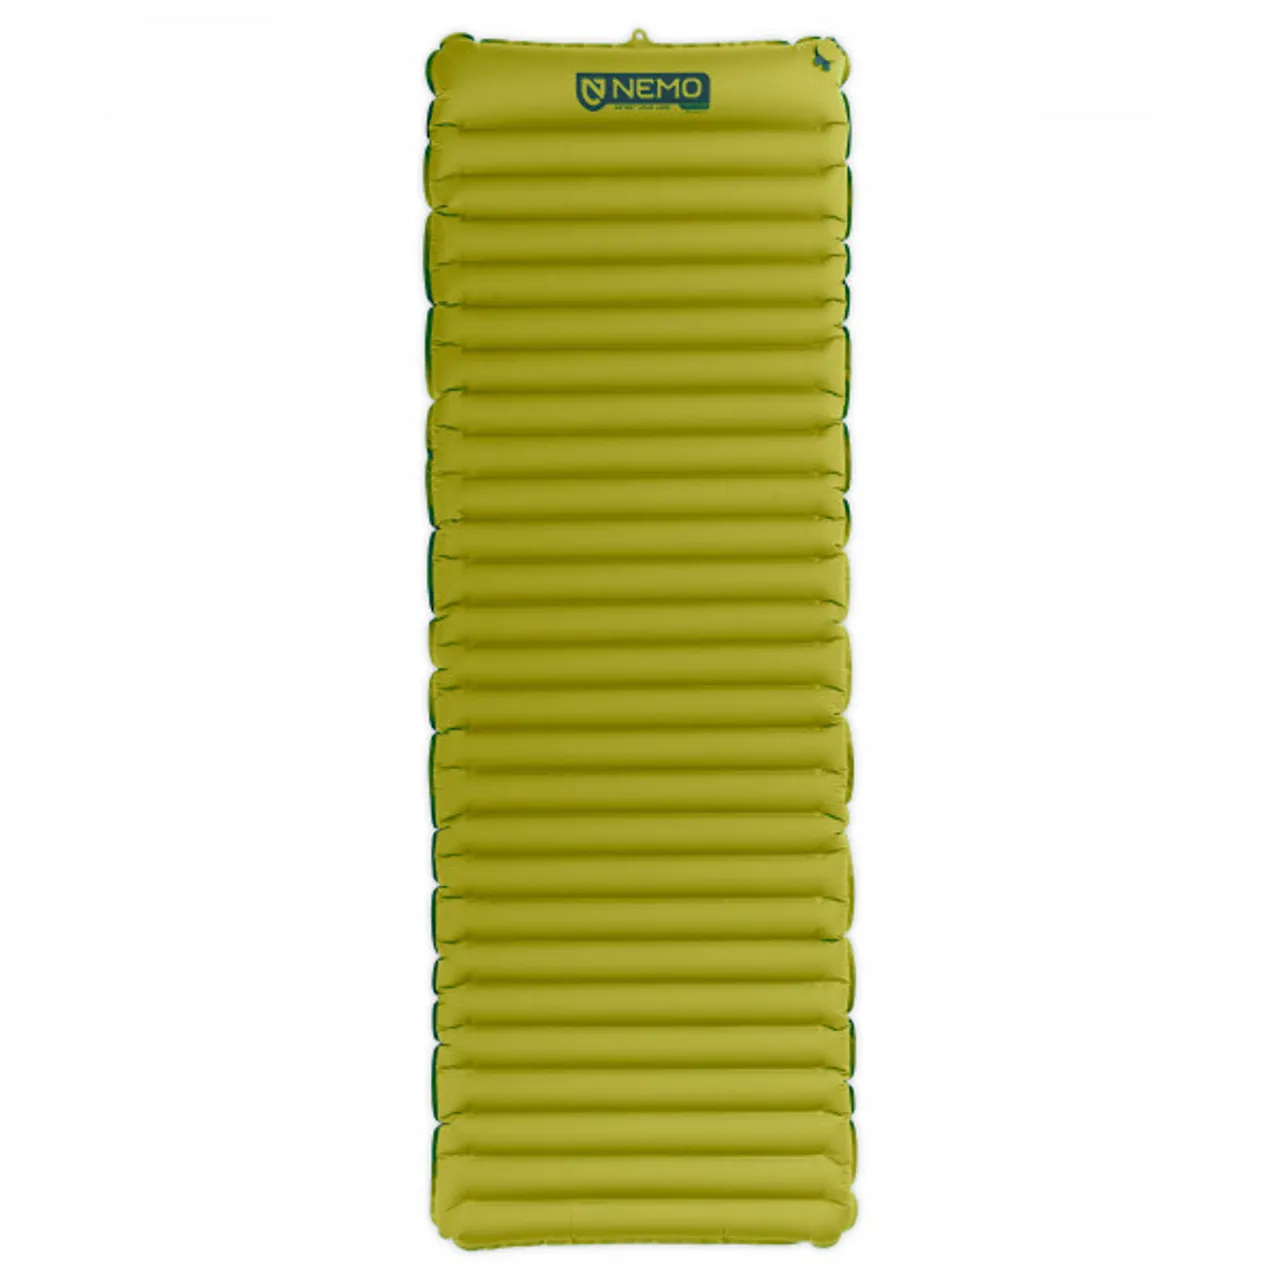 Nemo - Astro Insulated - Sleeping mat size Regular - Regular, olive